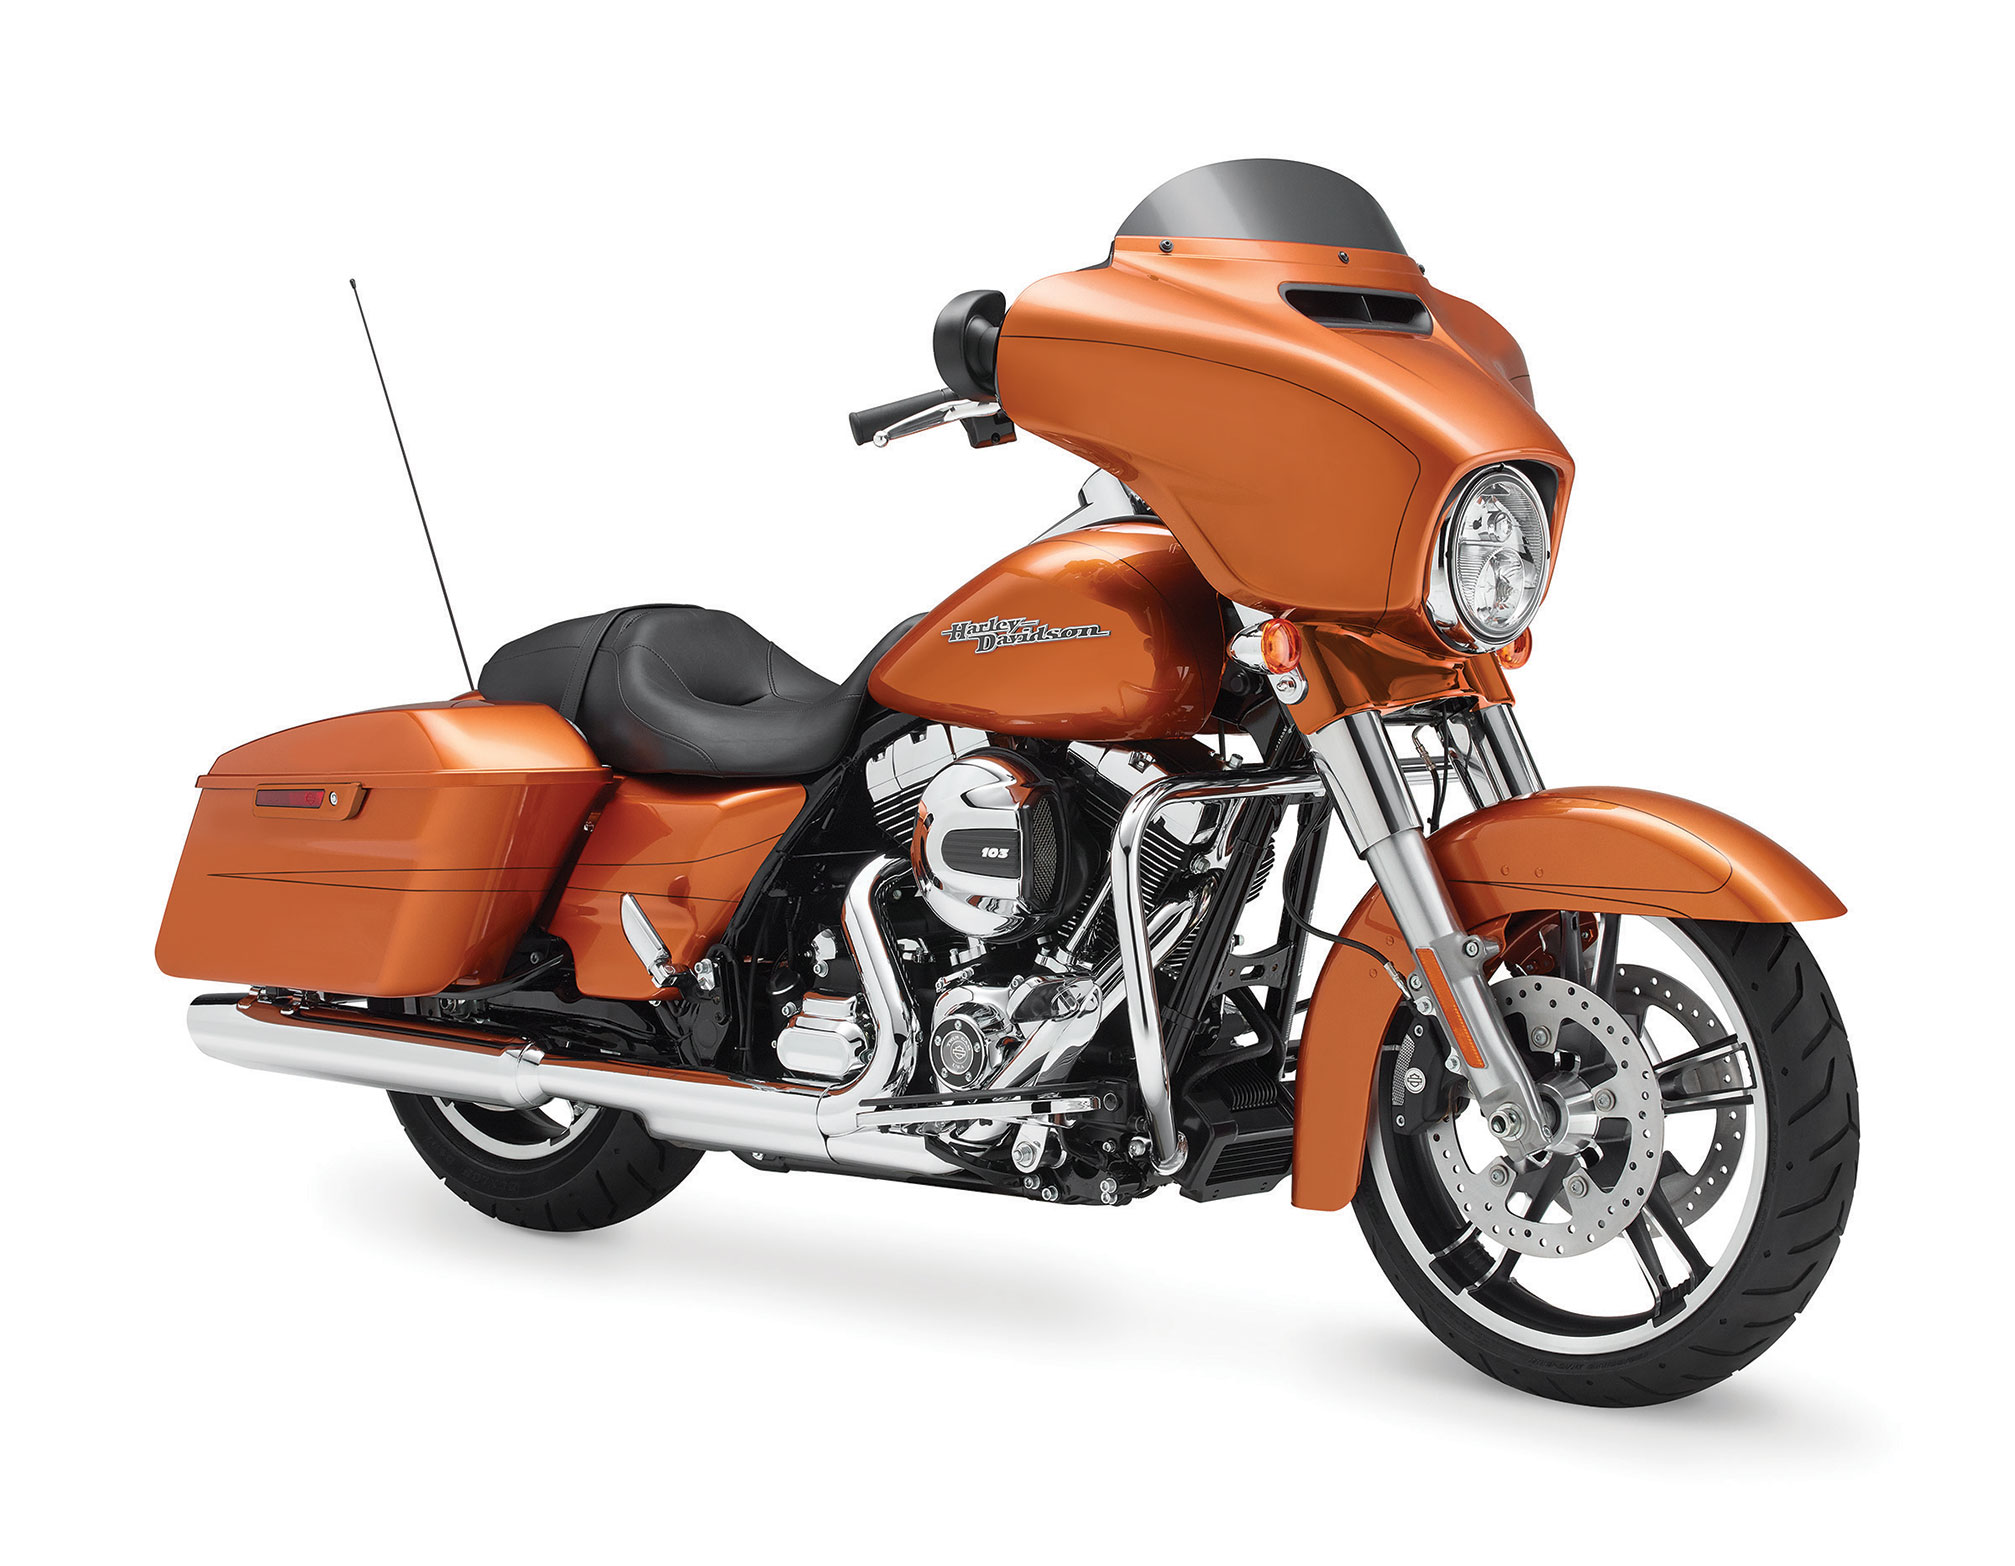 2015 Harley Davidson Flhxs Street Glide Special Review